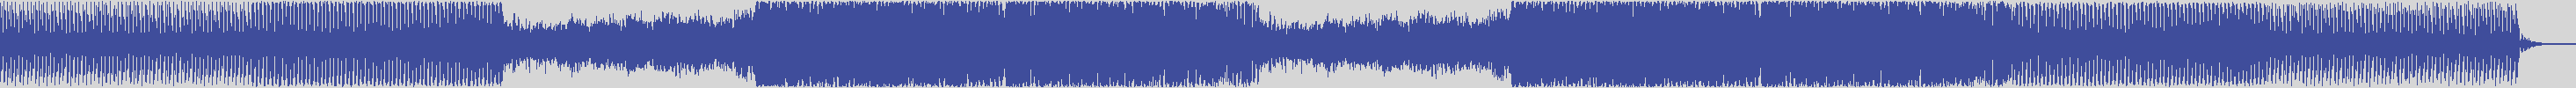 retroscena_records [RSR004] Dreams Key - Air Rotation [Extended Mix] audio wave form